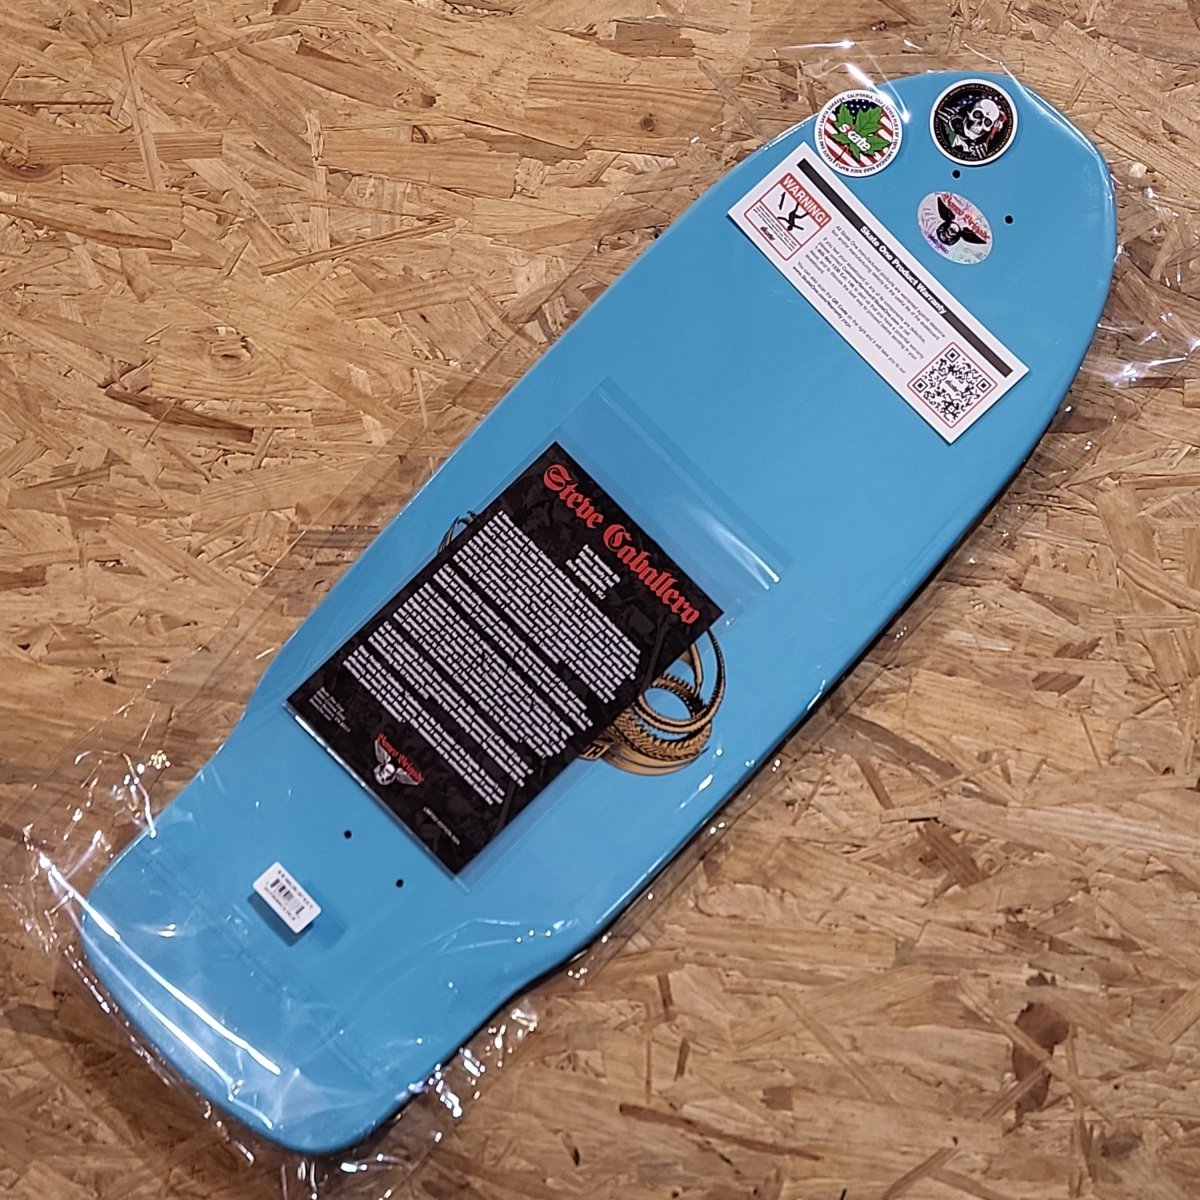 Powell-Peralta Bones Brigade S15 Steve Caballero Limited Edition Deck - Skateboard-Decks - Rollbrett Mission